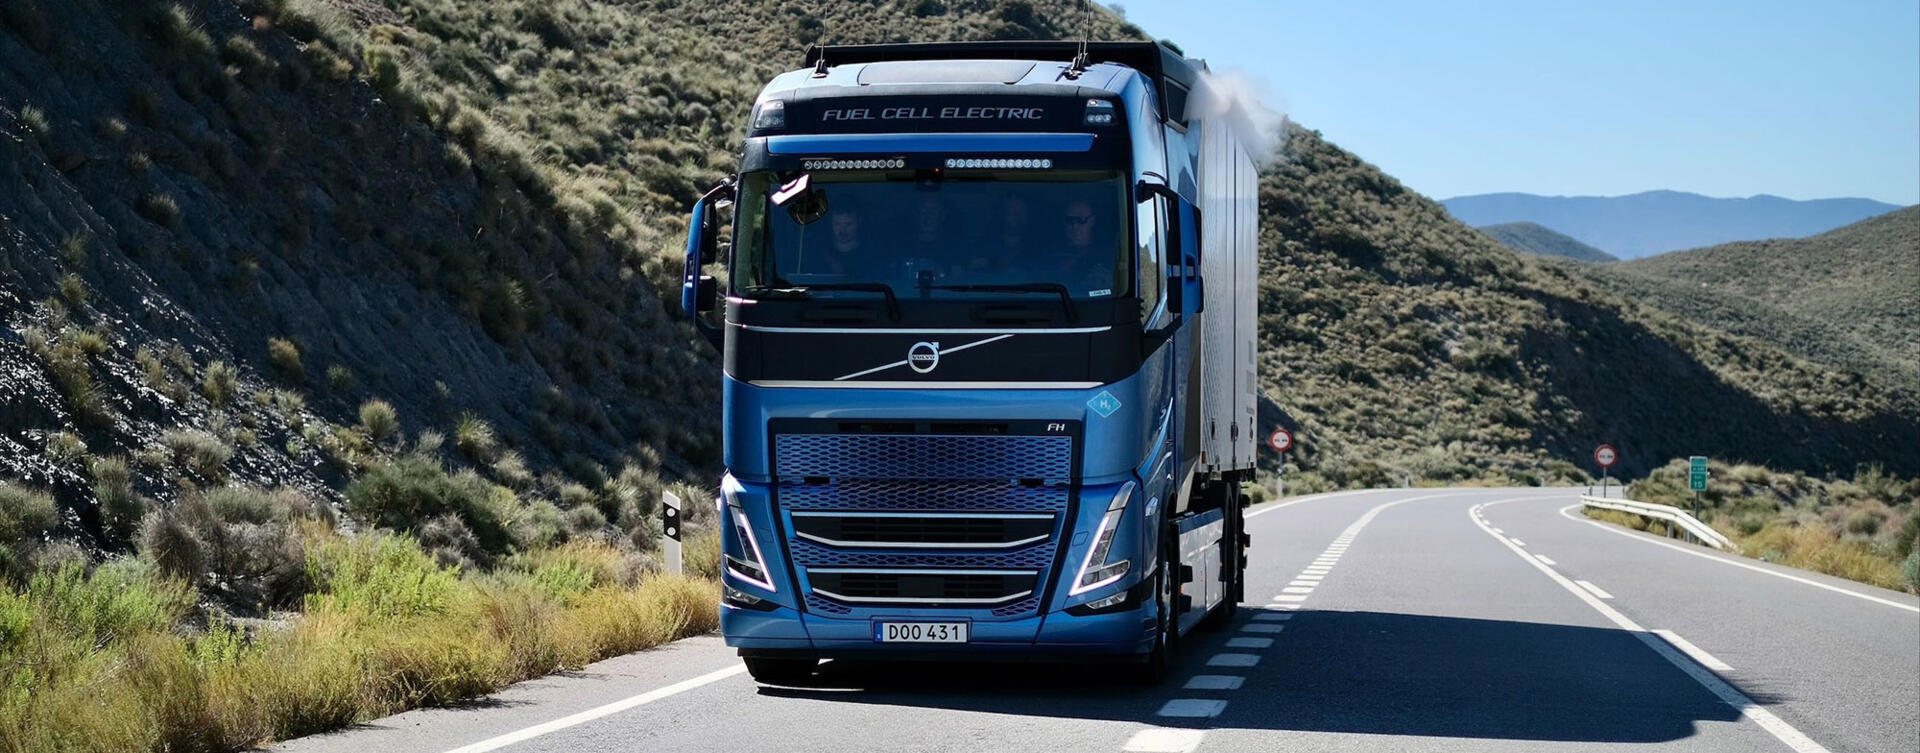 Nieuw: Volvo komt met trucks met waterstofverbrandingsmotor